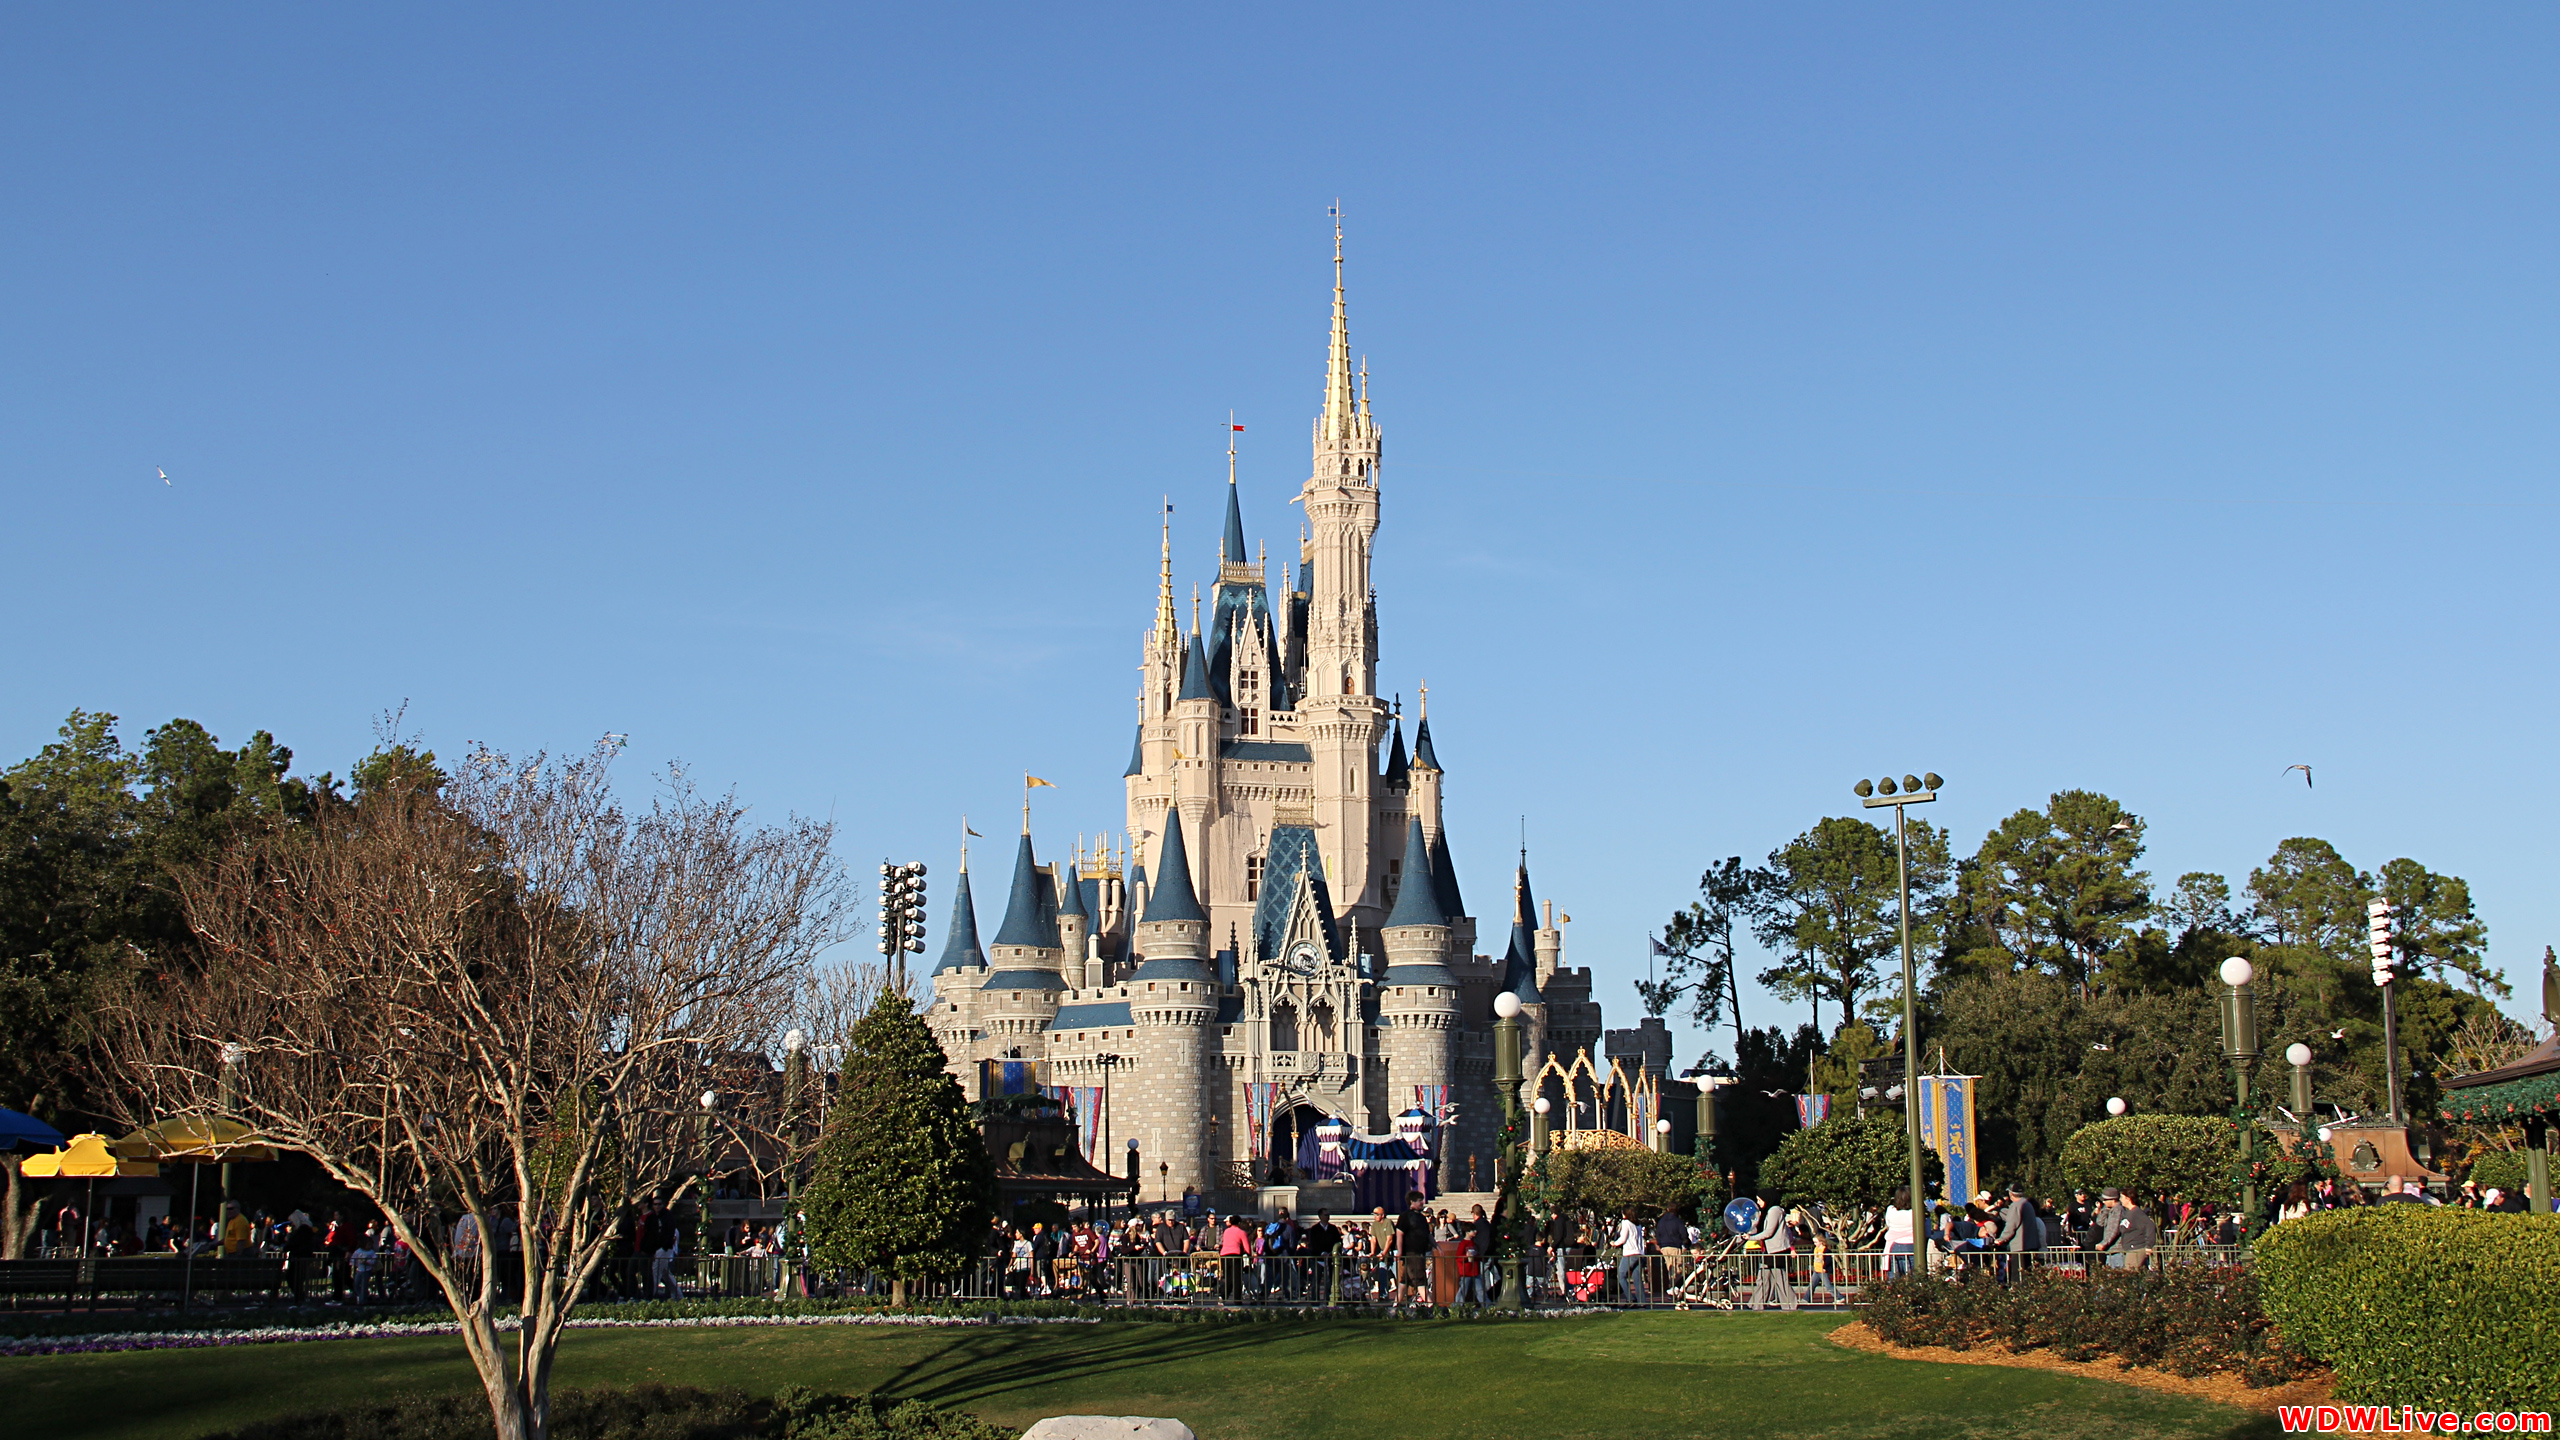 Disney world castle wallpaper